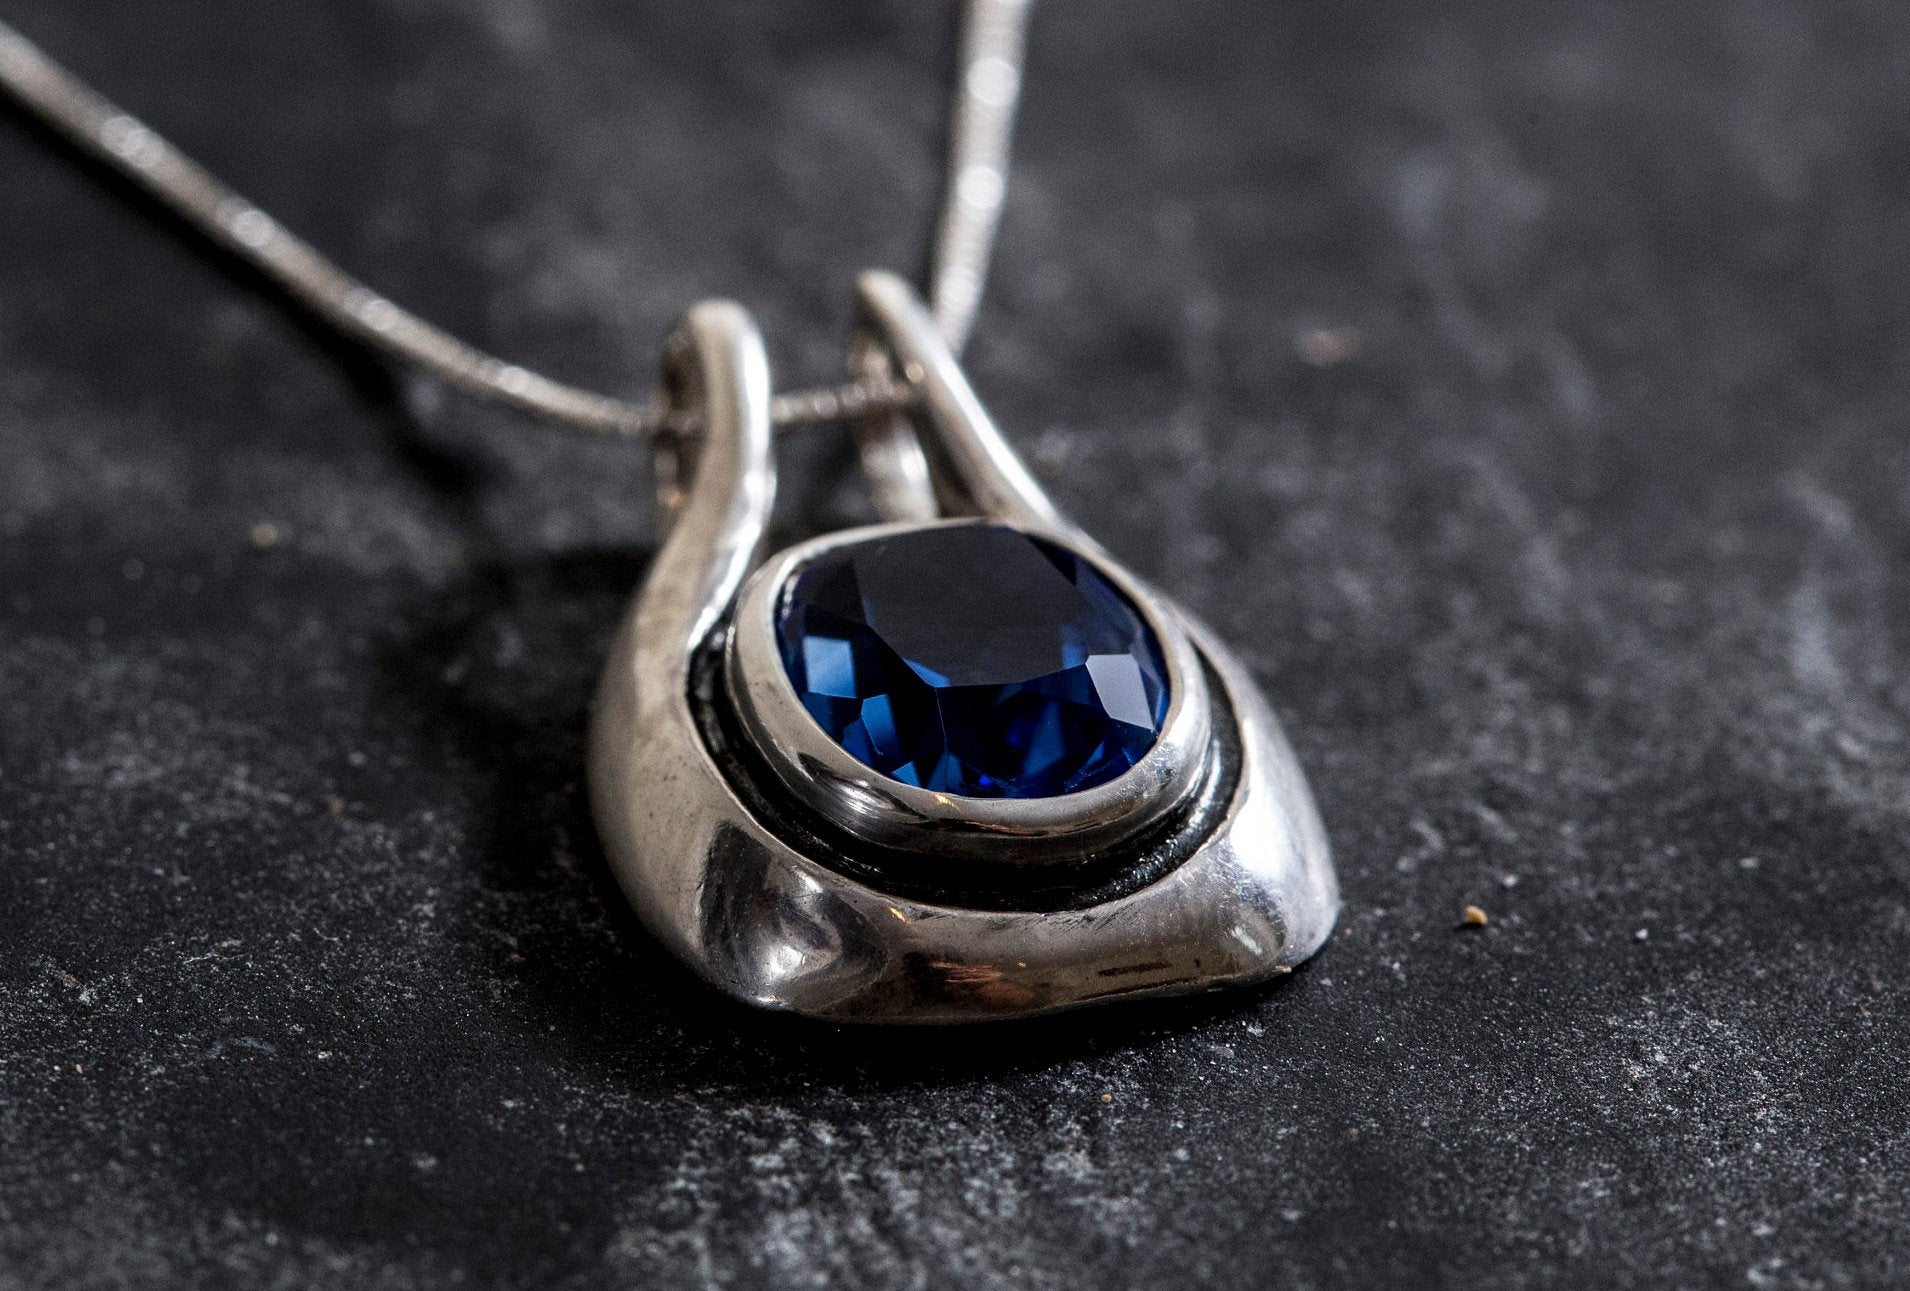 Blue Sapphire Pendant, Created Sapphire, Vintage Pendant, Sapphire Pendant, Blue Pendant, Artistic Pendant, Solid Silver Pendant, Sapphire